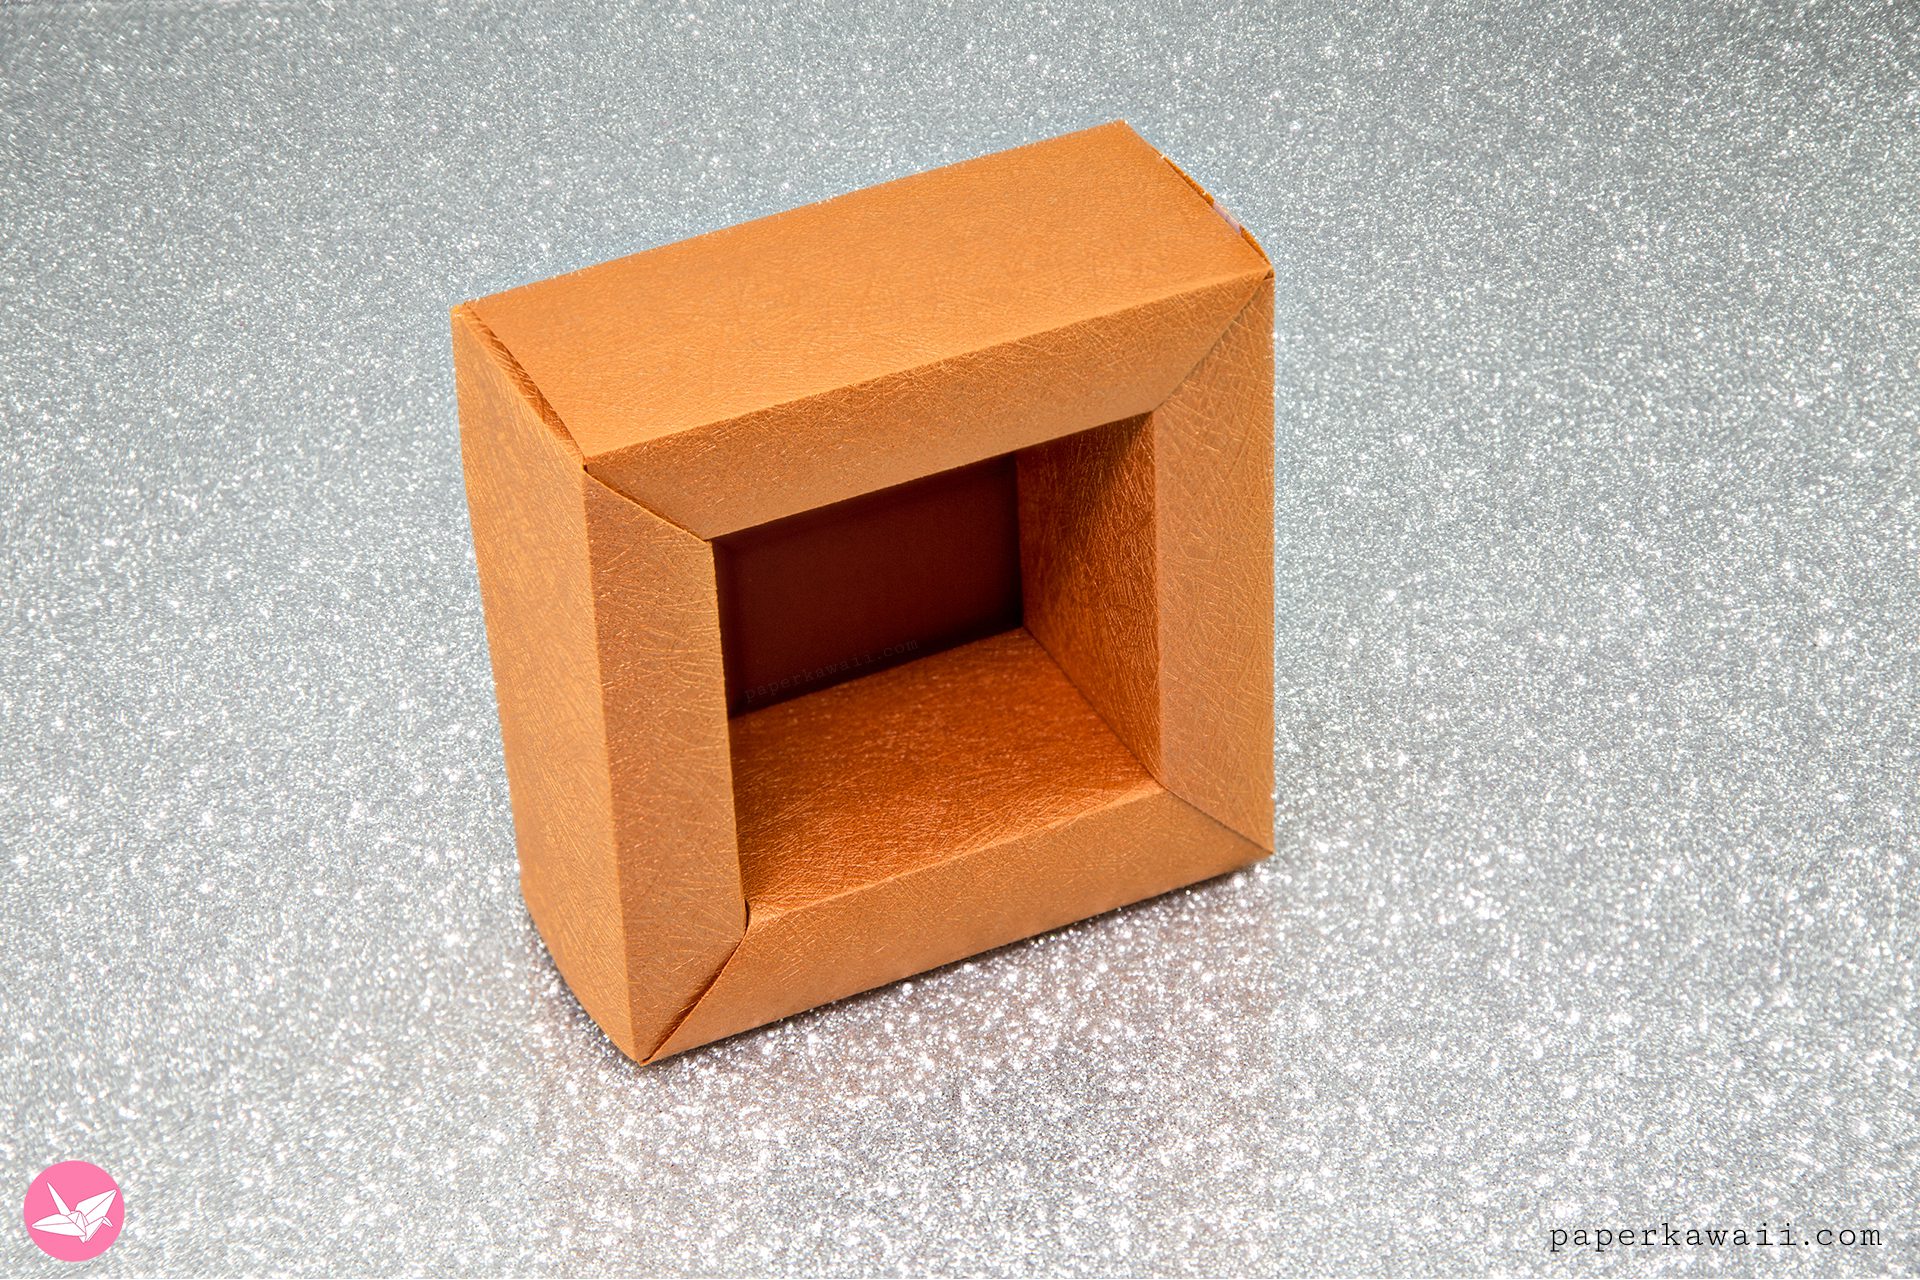 Modular Origami Frame Square Paper Kawaii 05